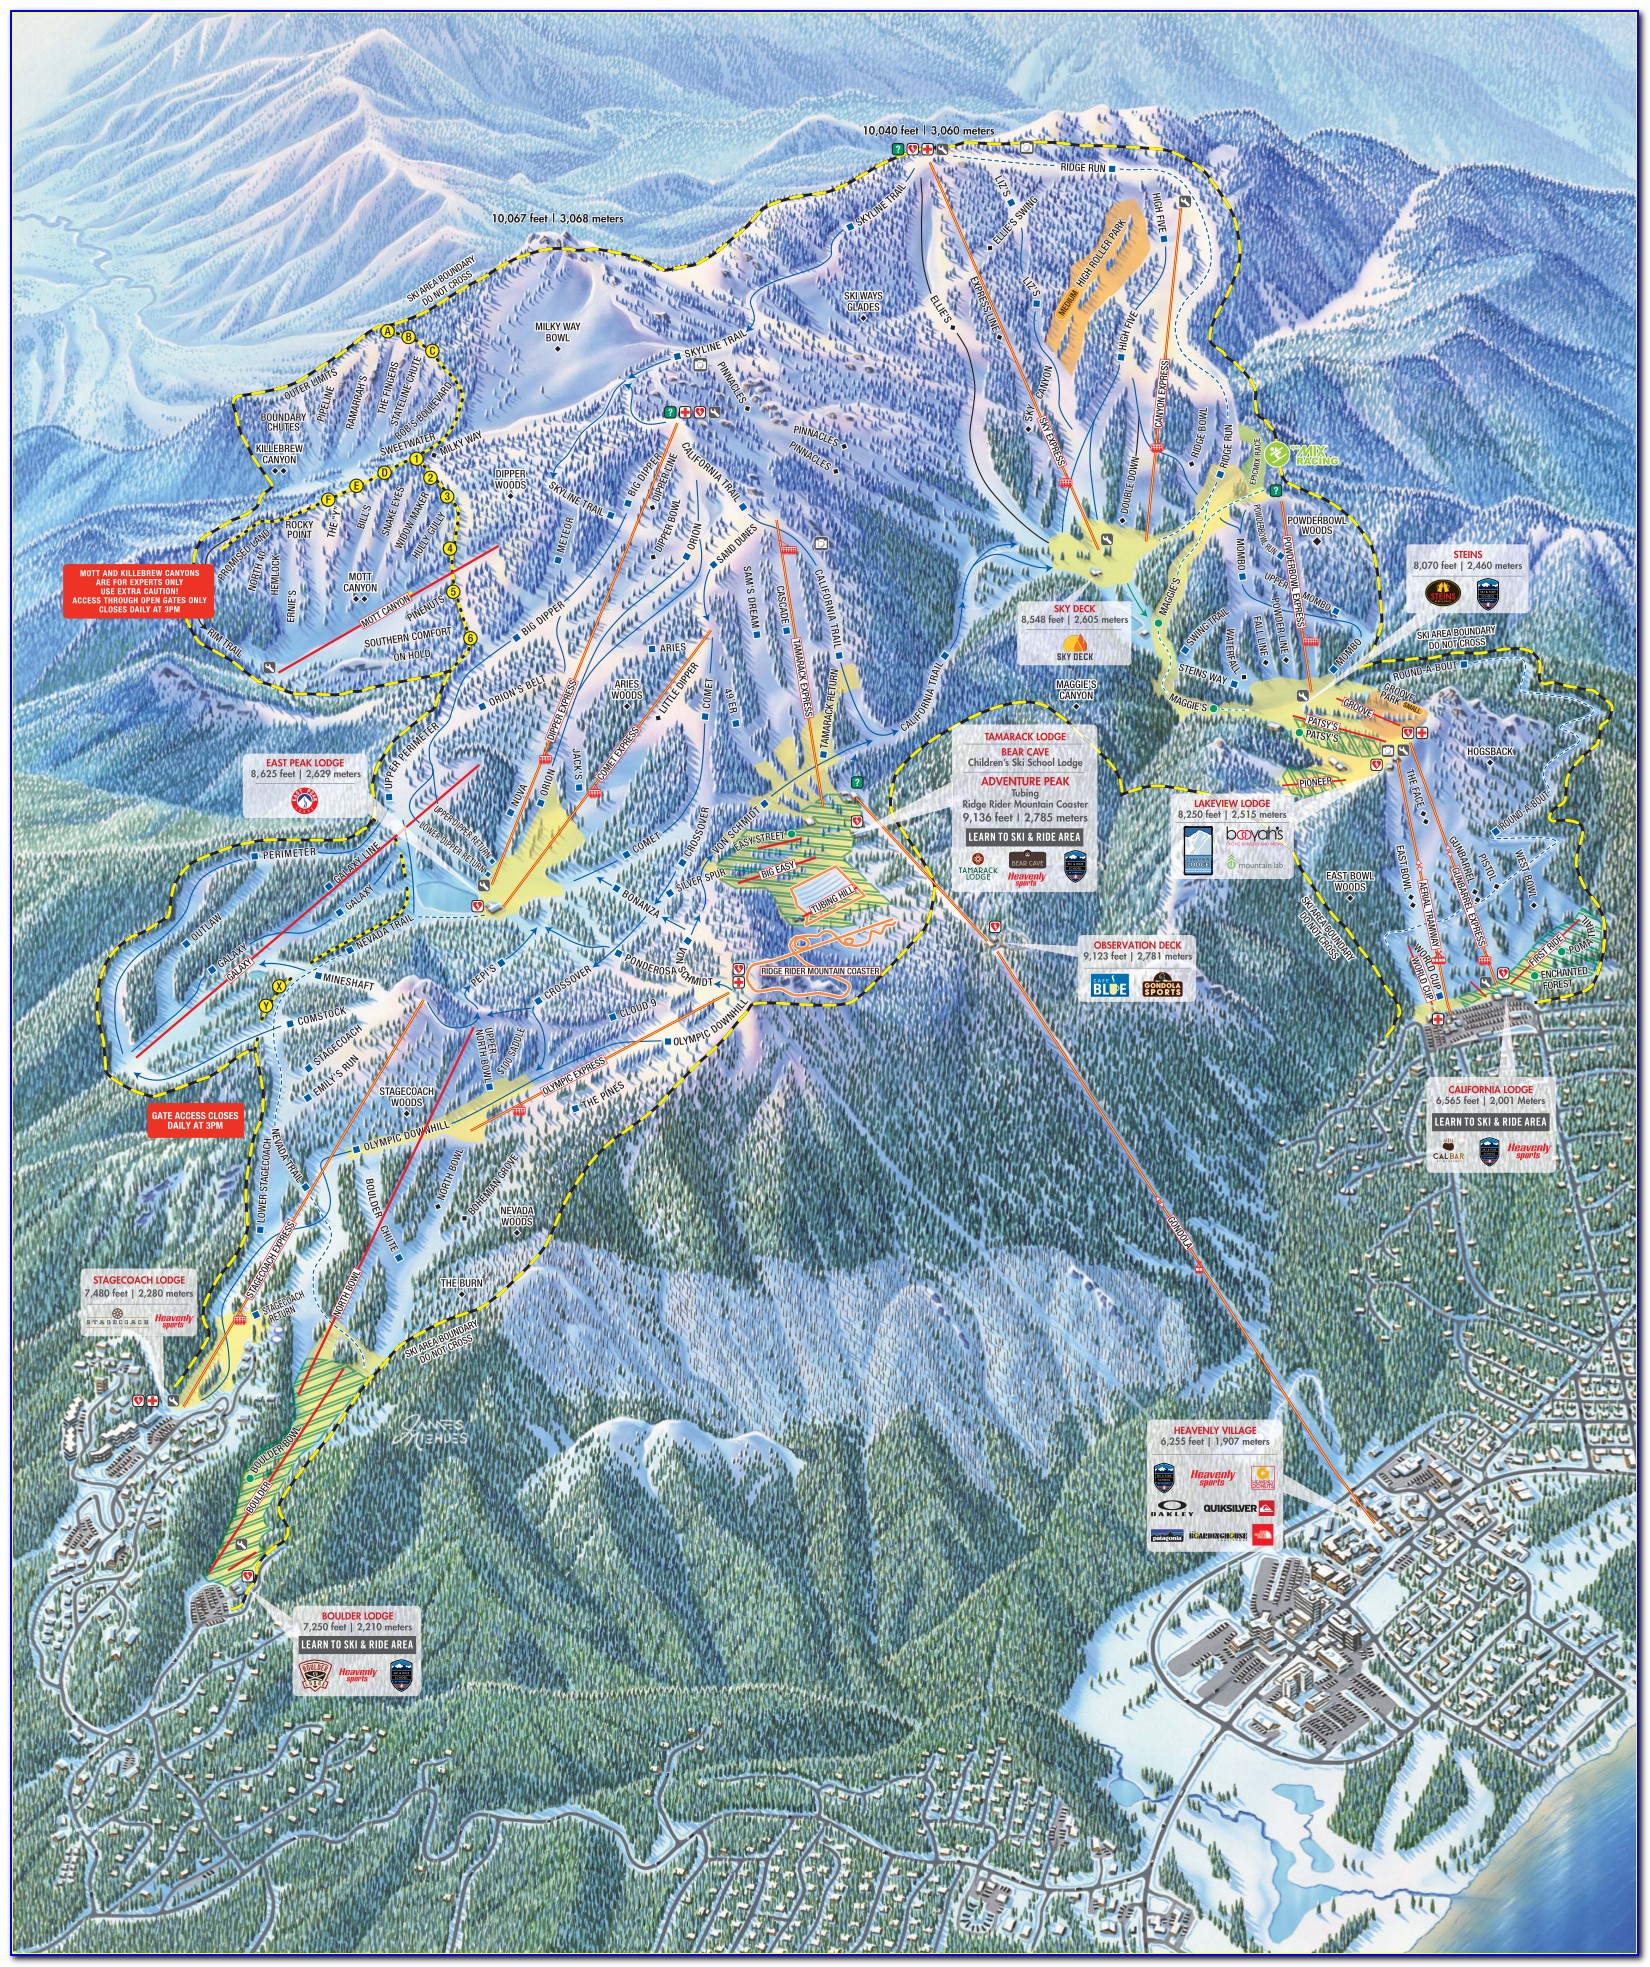 Heavenly Ski Resort Directions